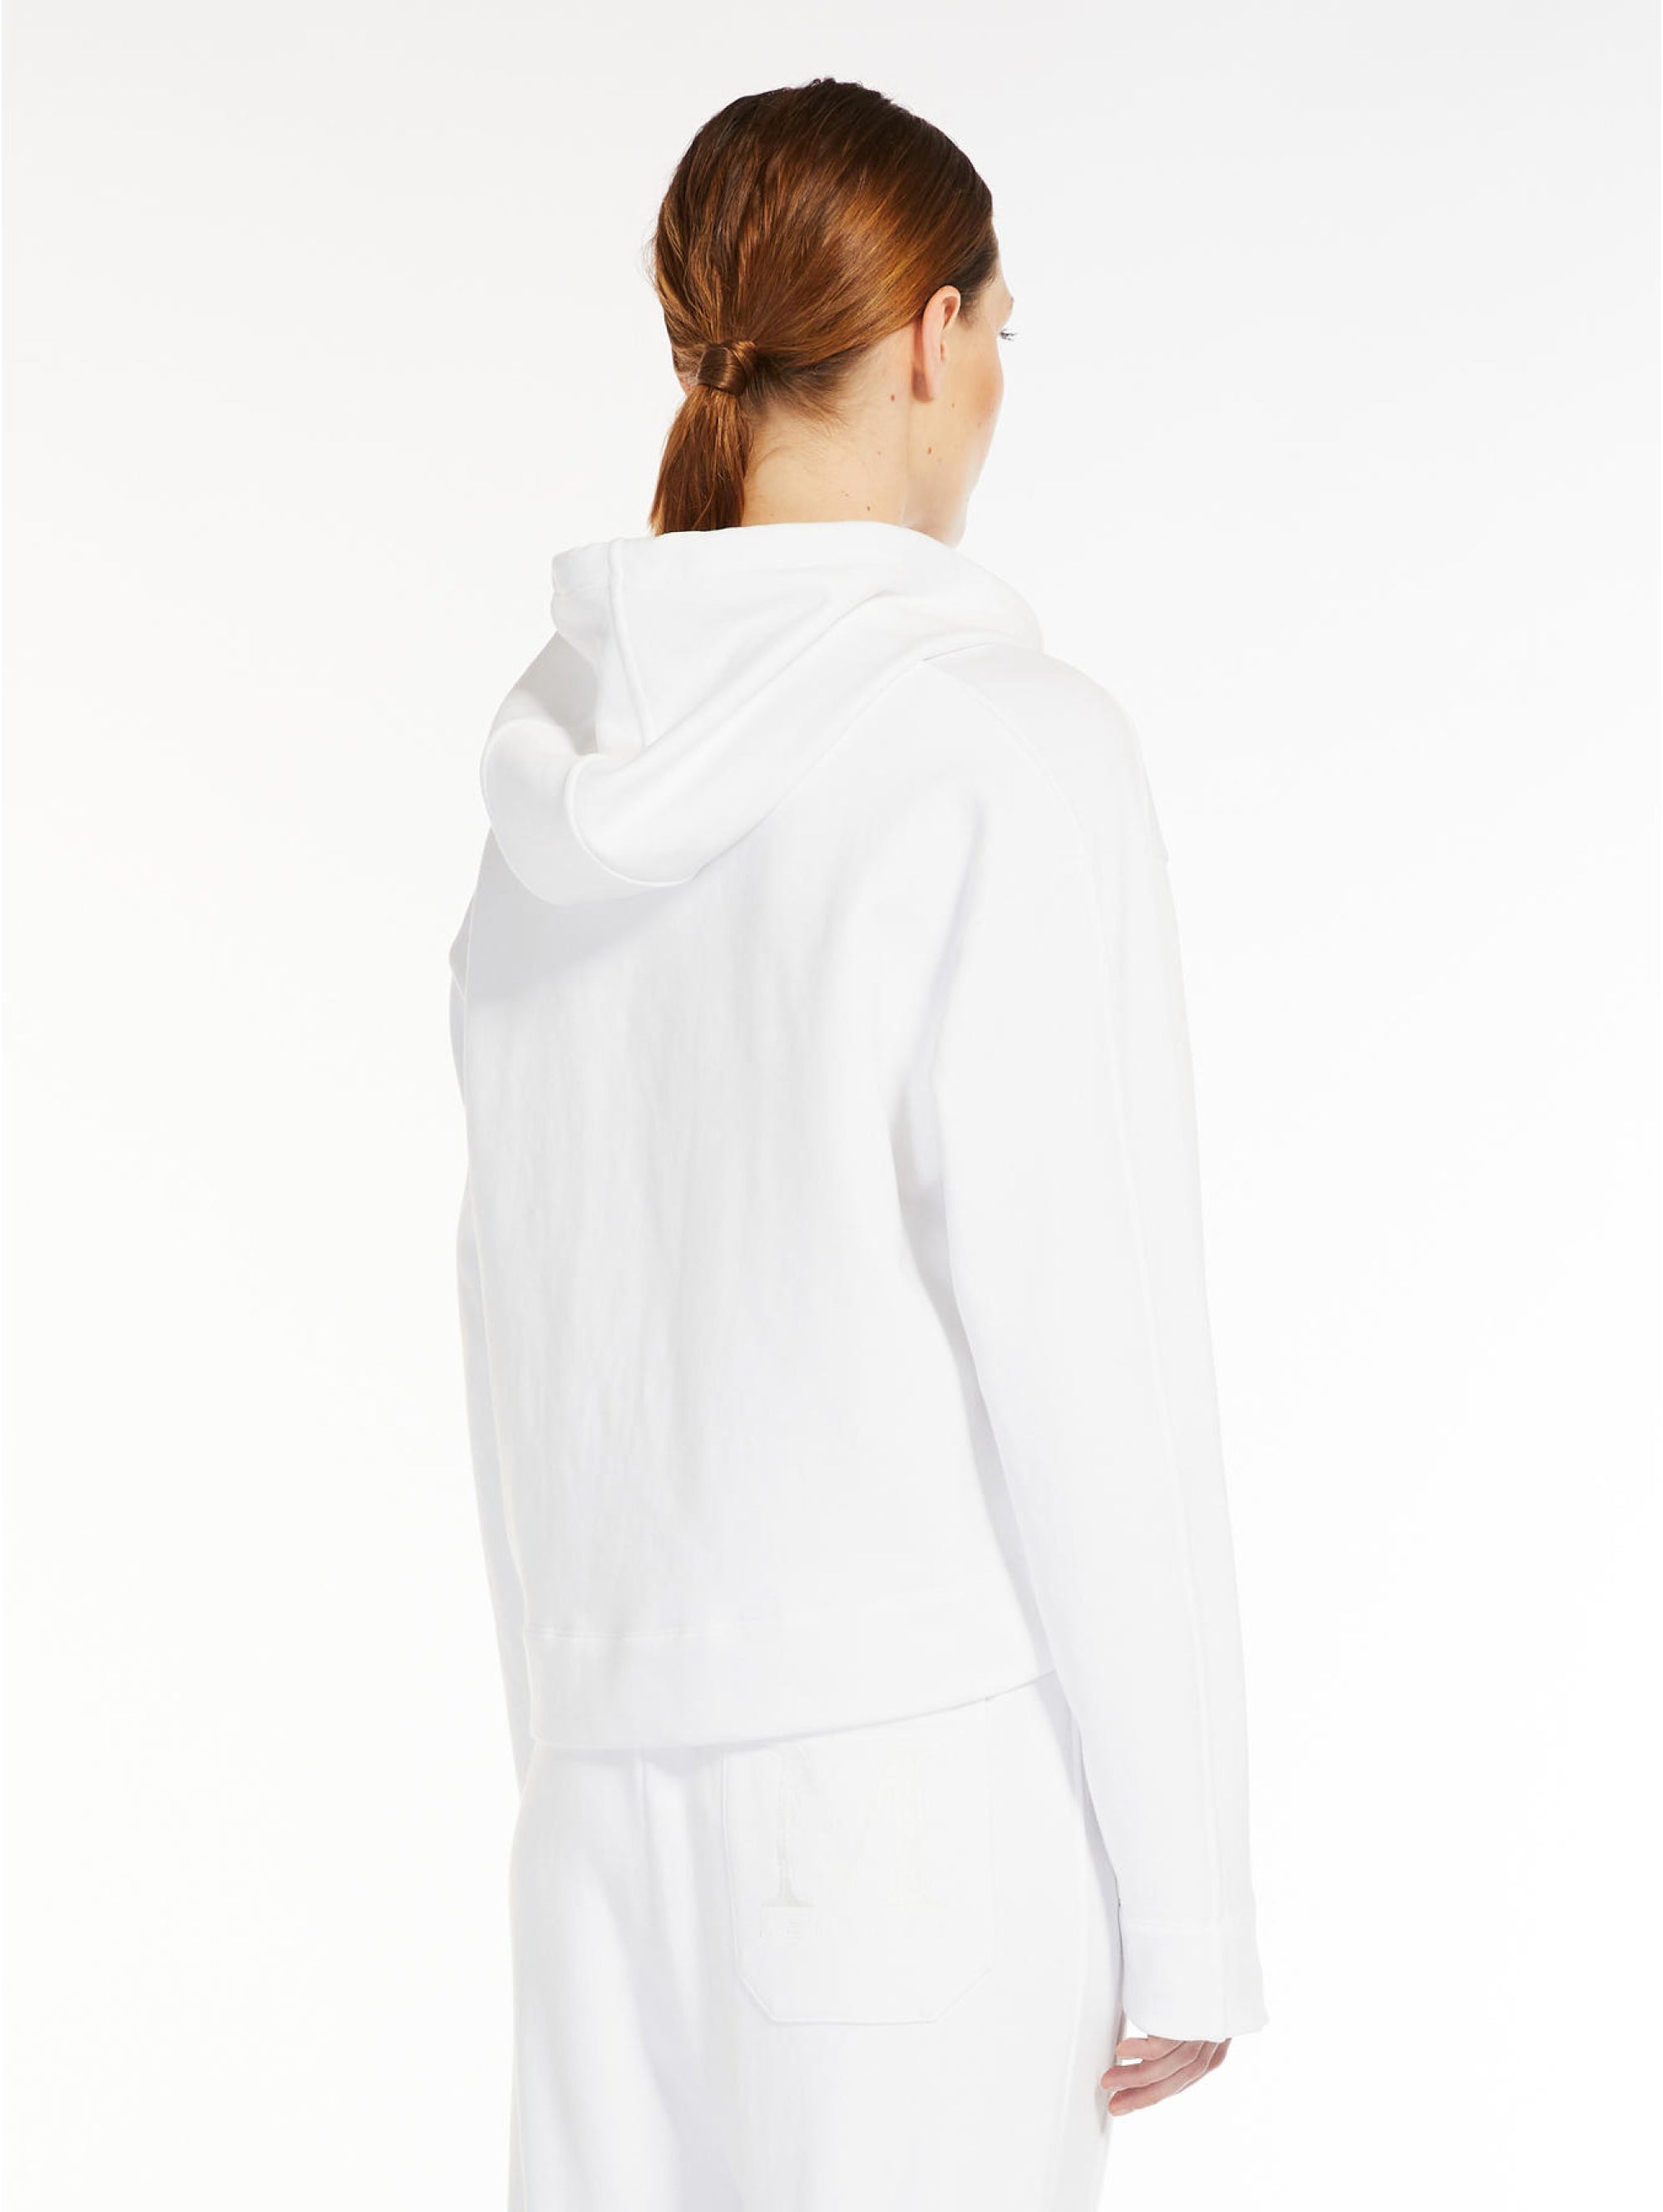 Hooded Sweatshirt with Maxi White Logo